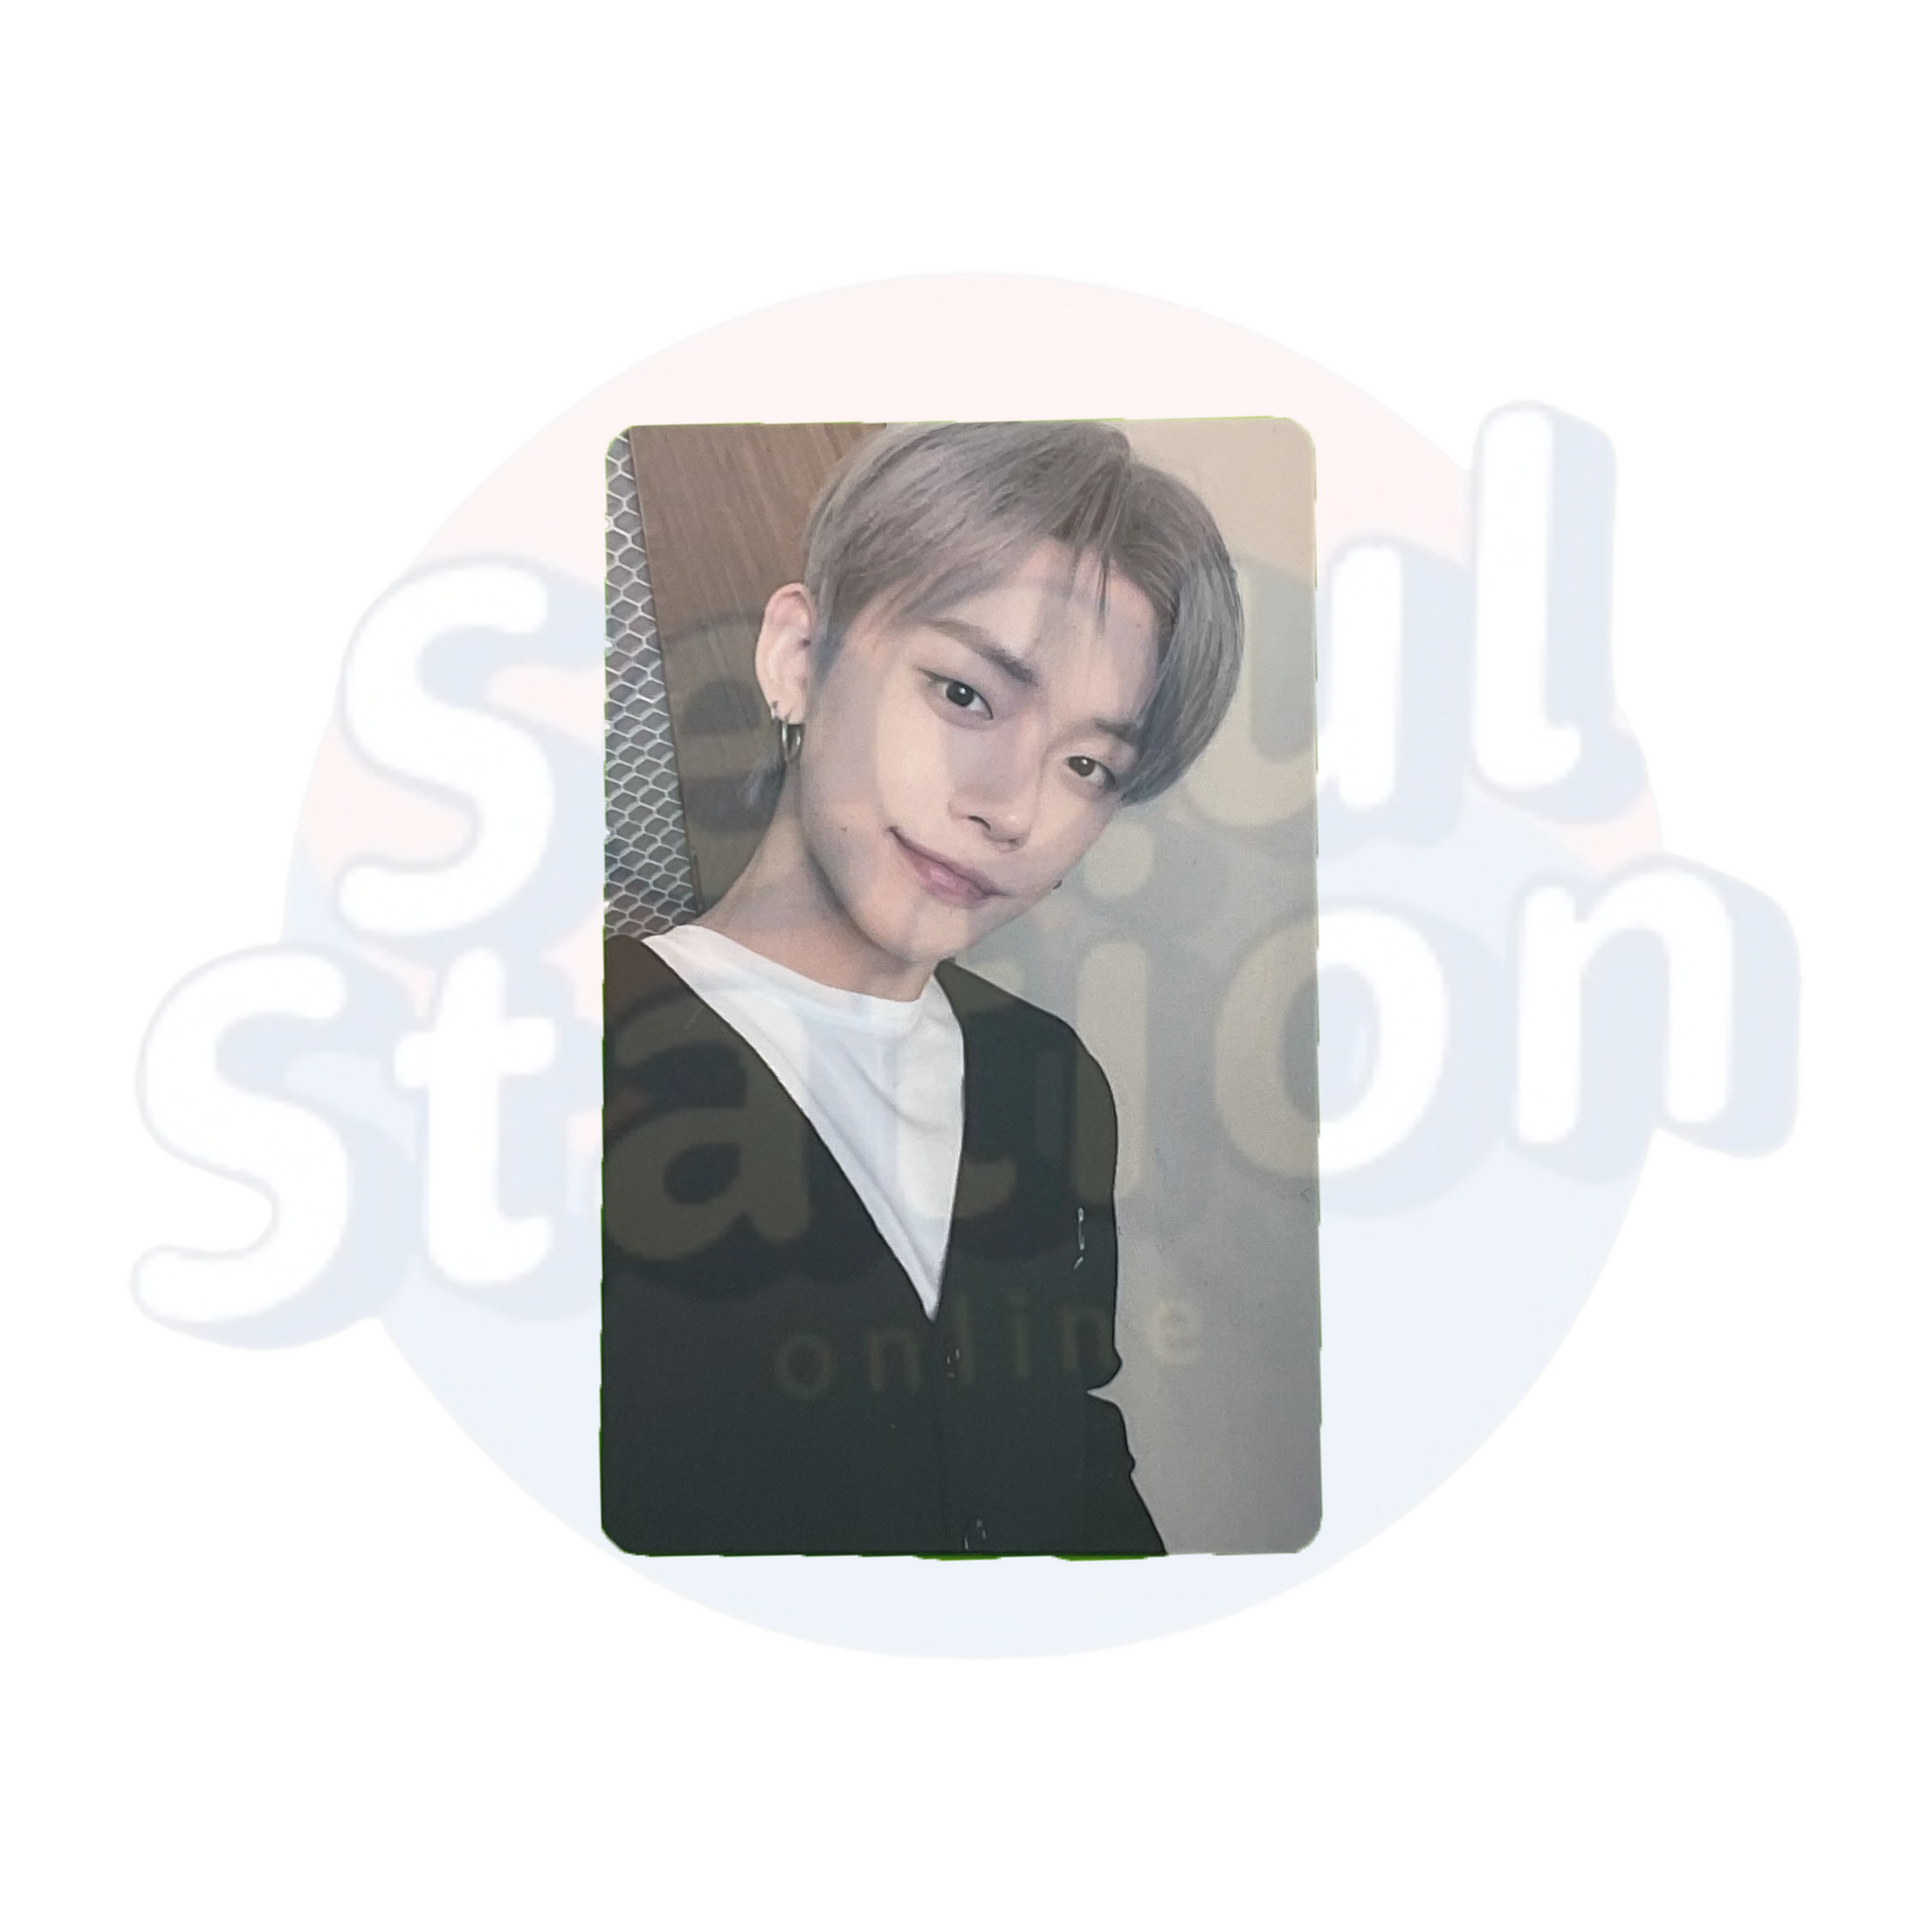 TXT - Minisode 2: Thursday's Child - 2nd Round M2U Photo Card (Grey Back) Yeonjun